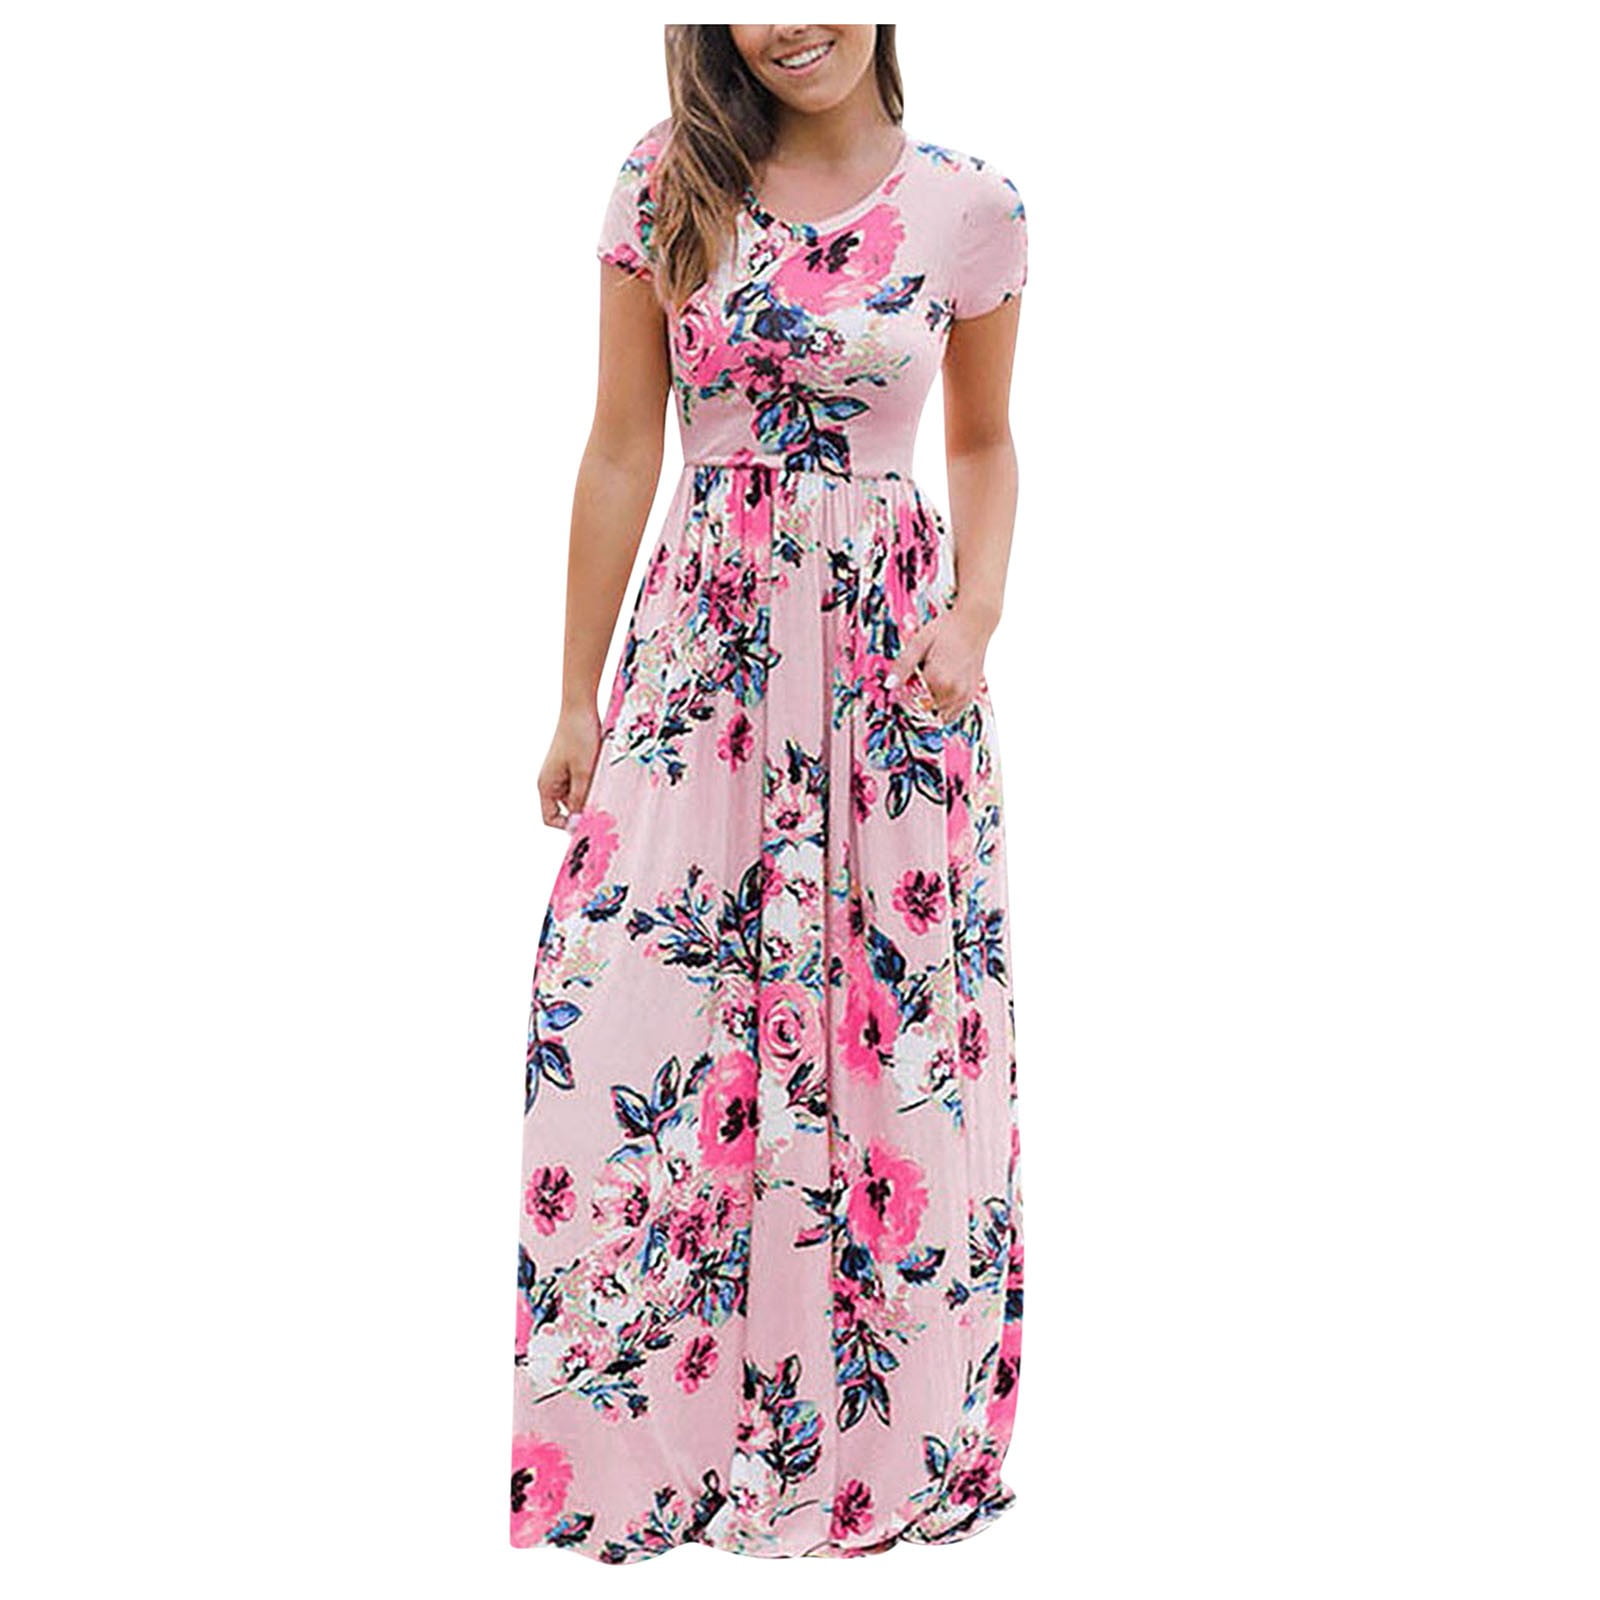 Toyfunny Women's Casual Floral Printed Dress Short Sleeve Maxi Dress ...